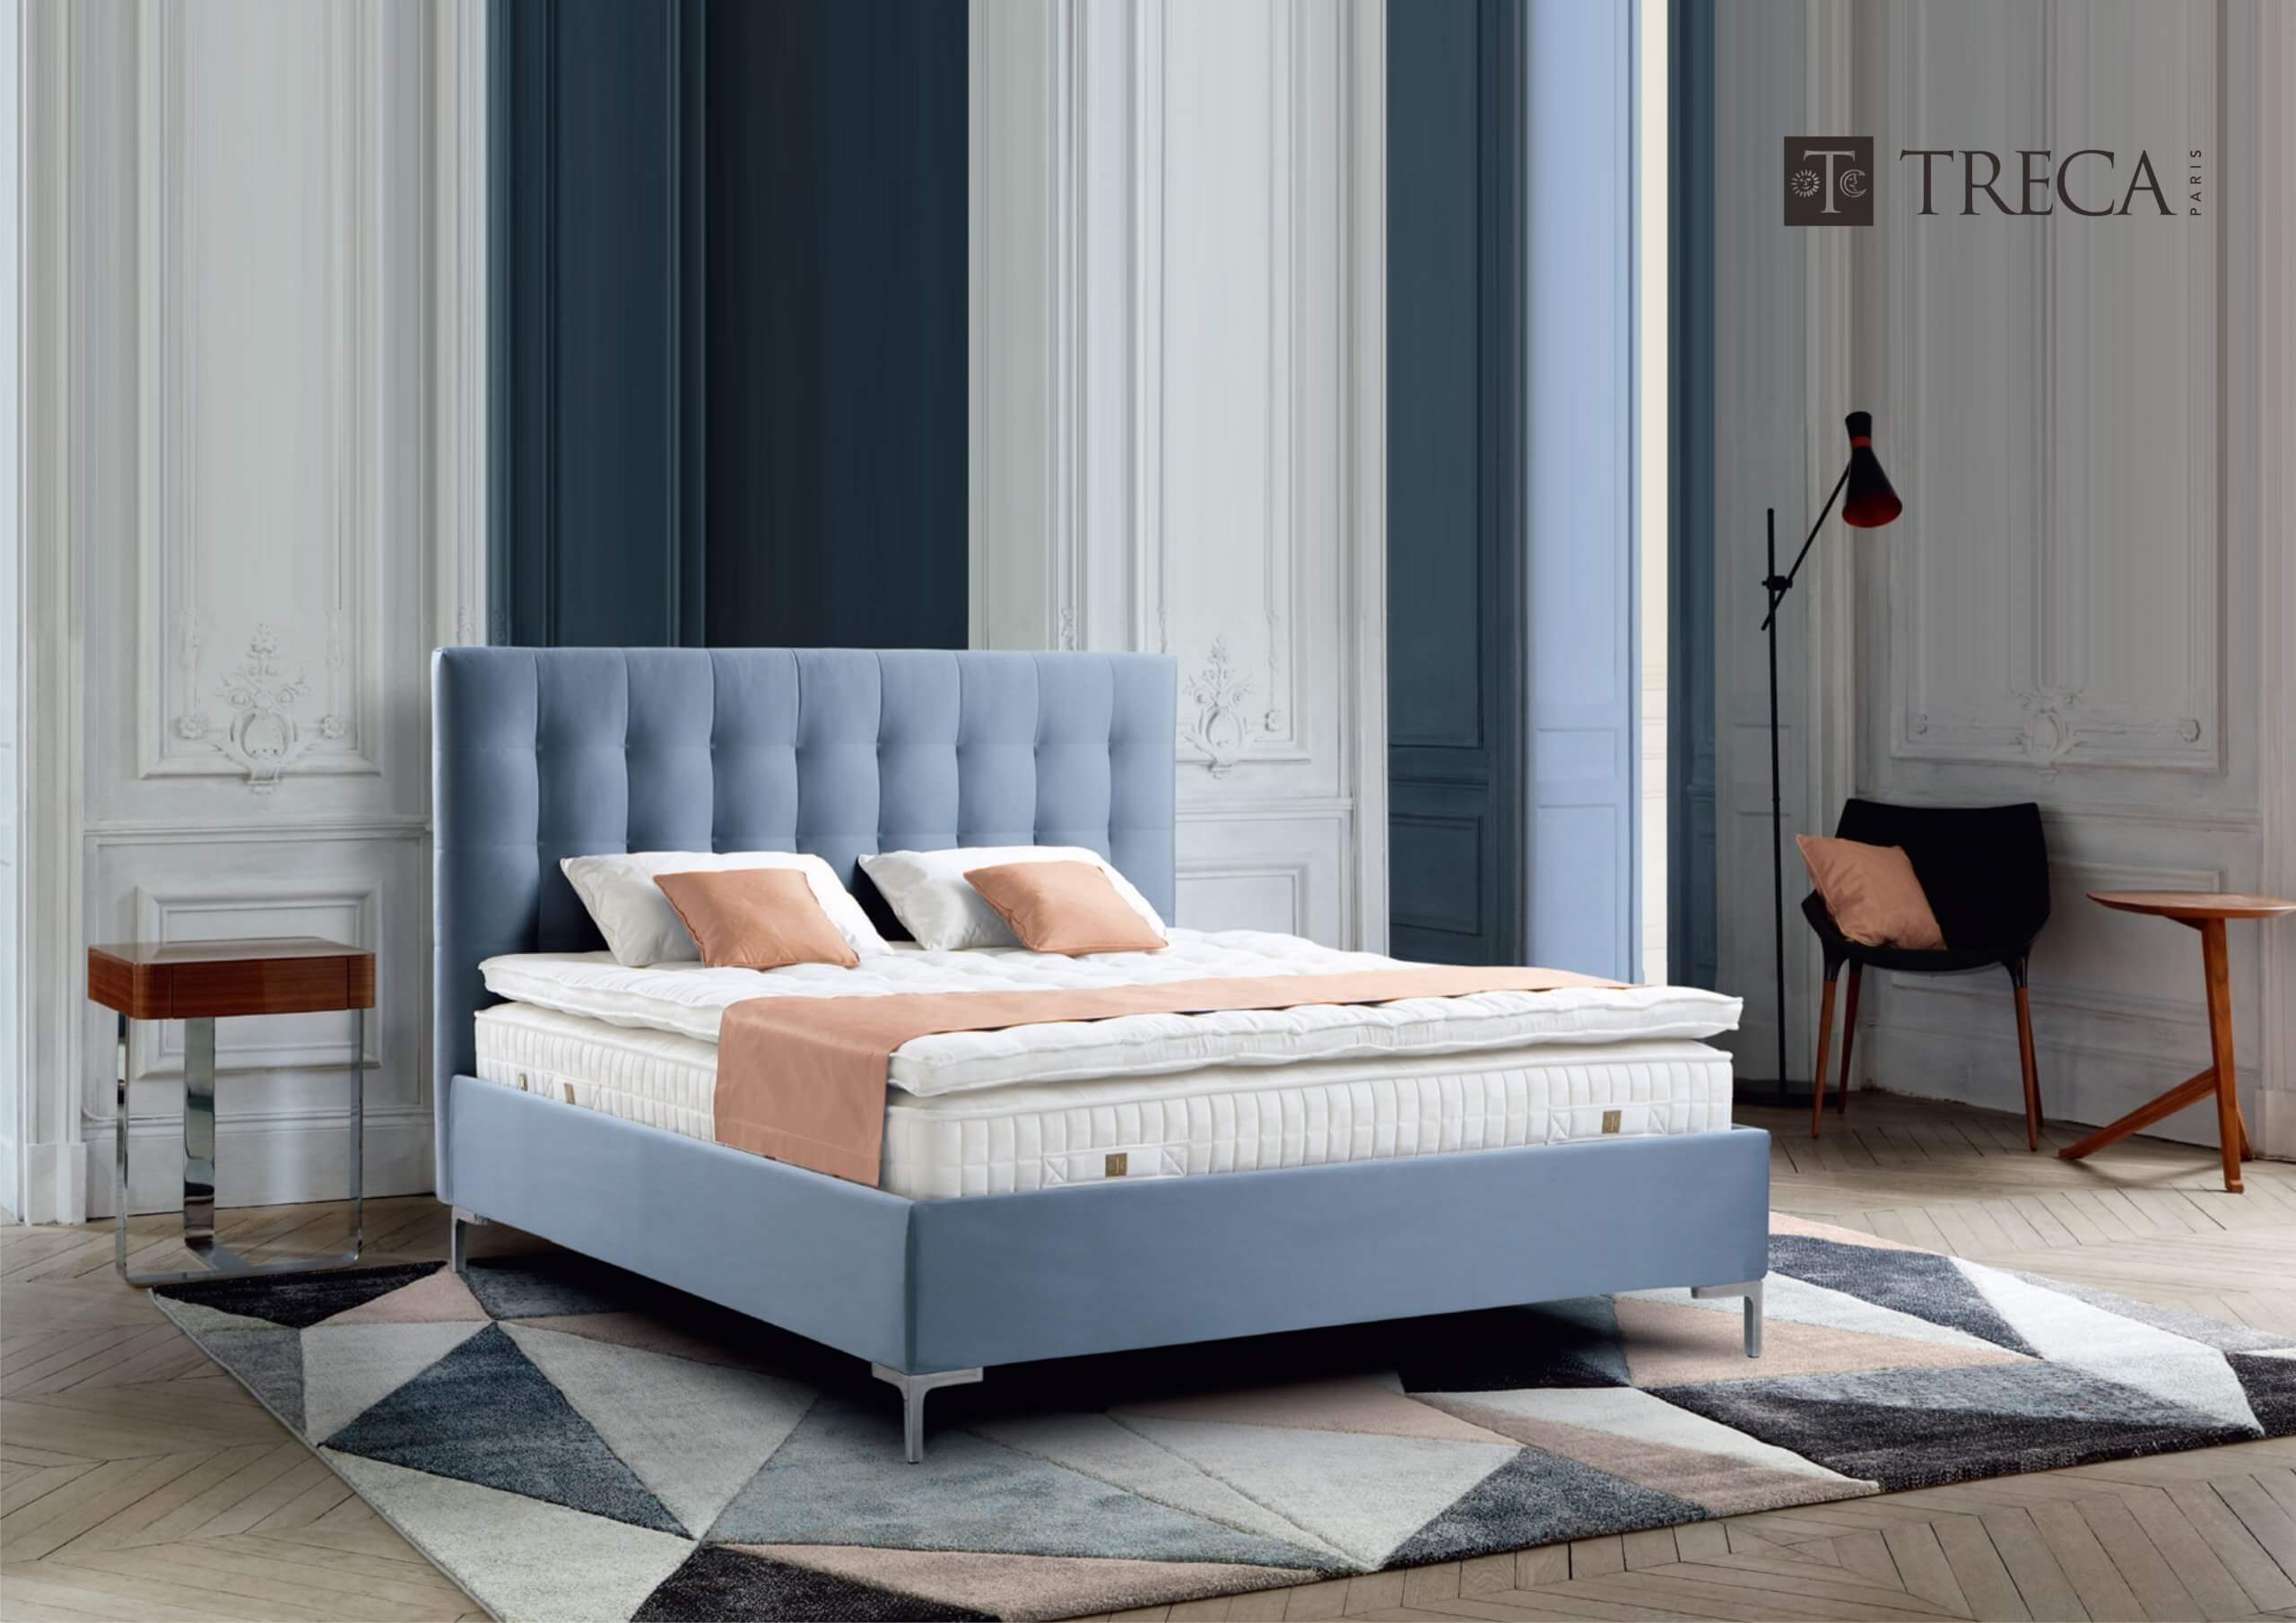 TRECA Paris國際頂級床墊品牌